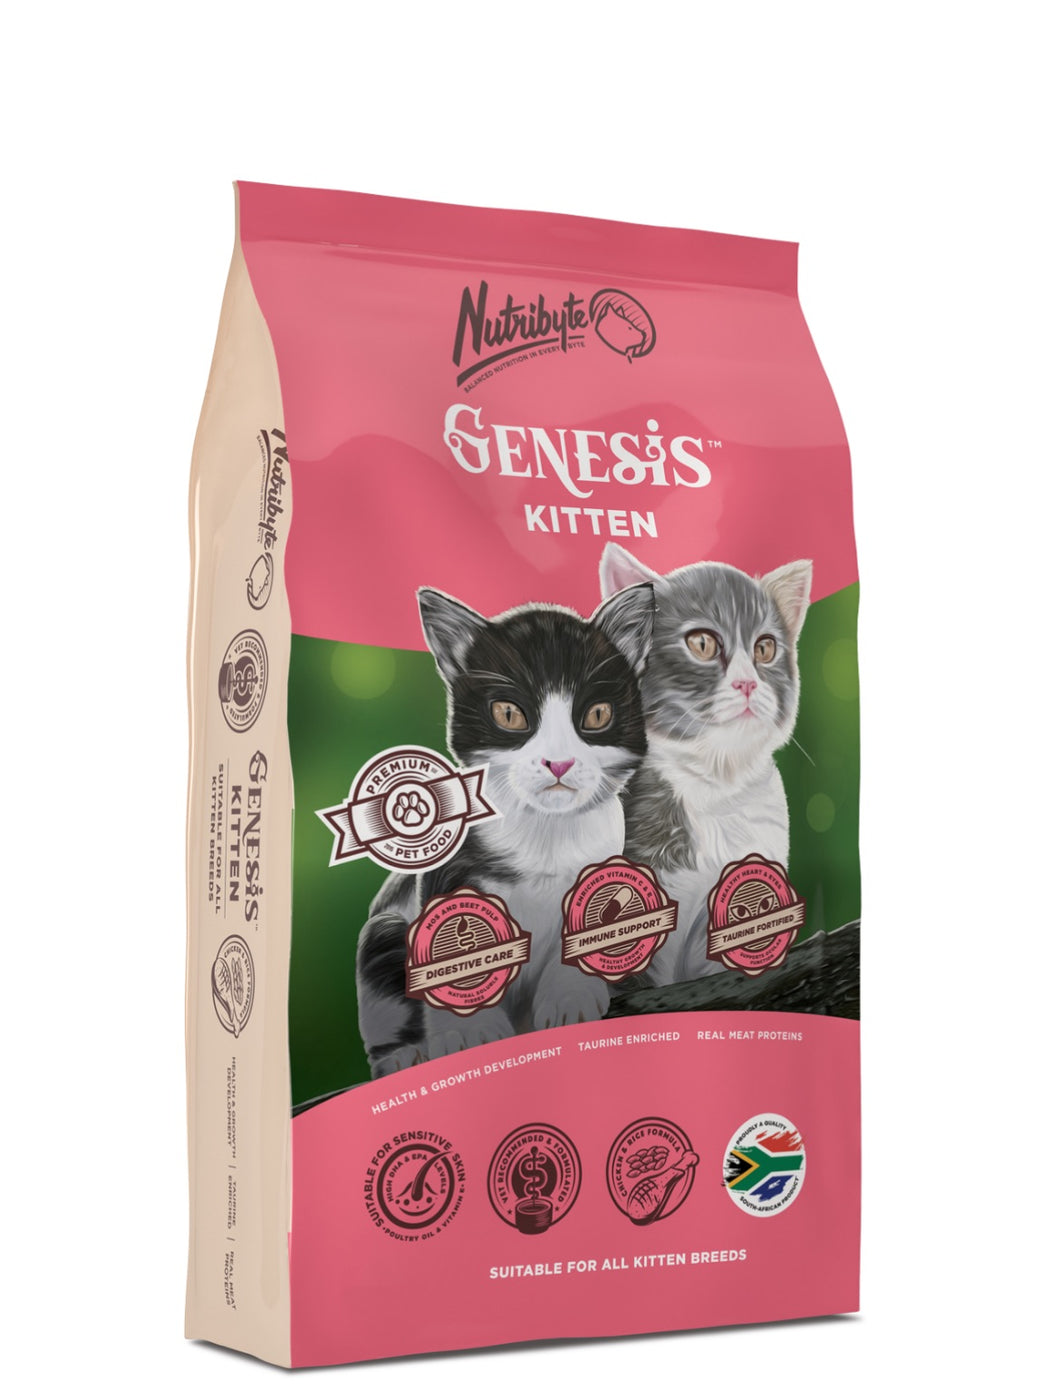 Nutribyte GENESIS Kitten Food 3kg, 10kg & 20kg